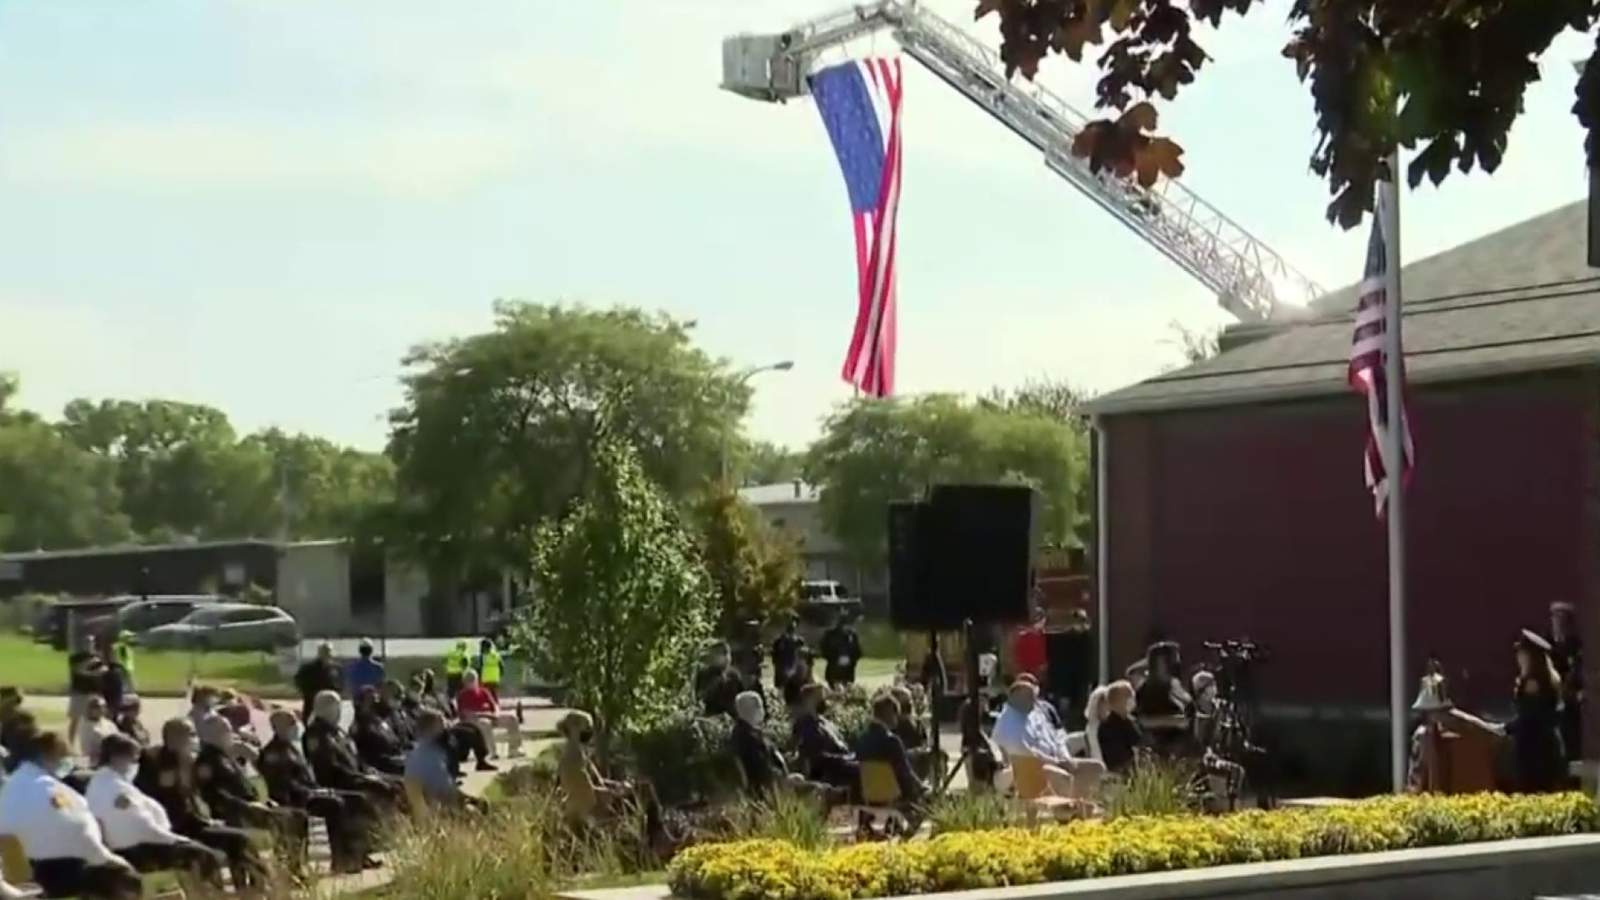 A look at the 9/11 memorial garden in Rochester